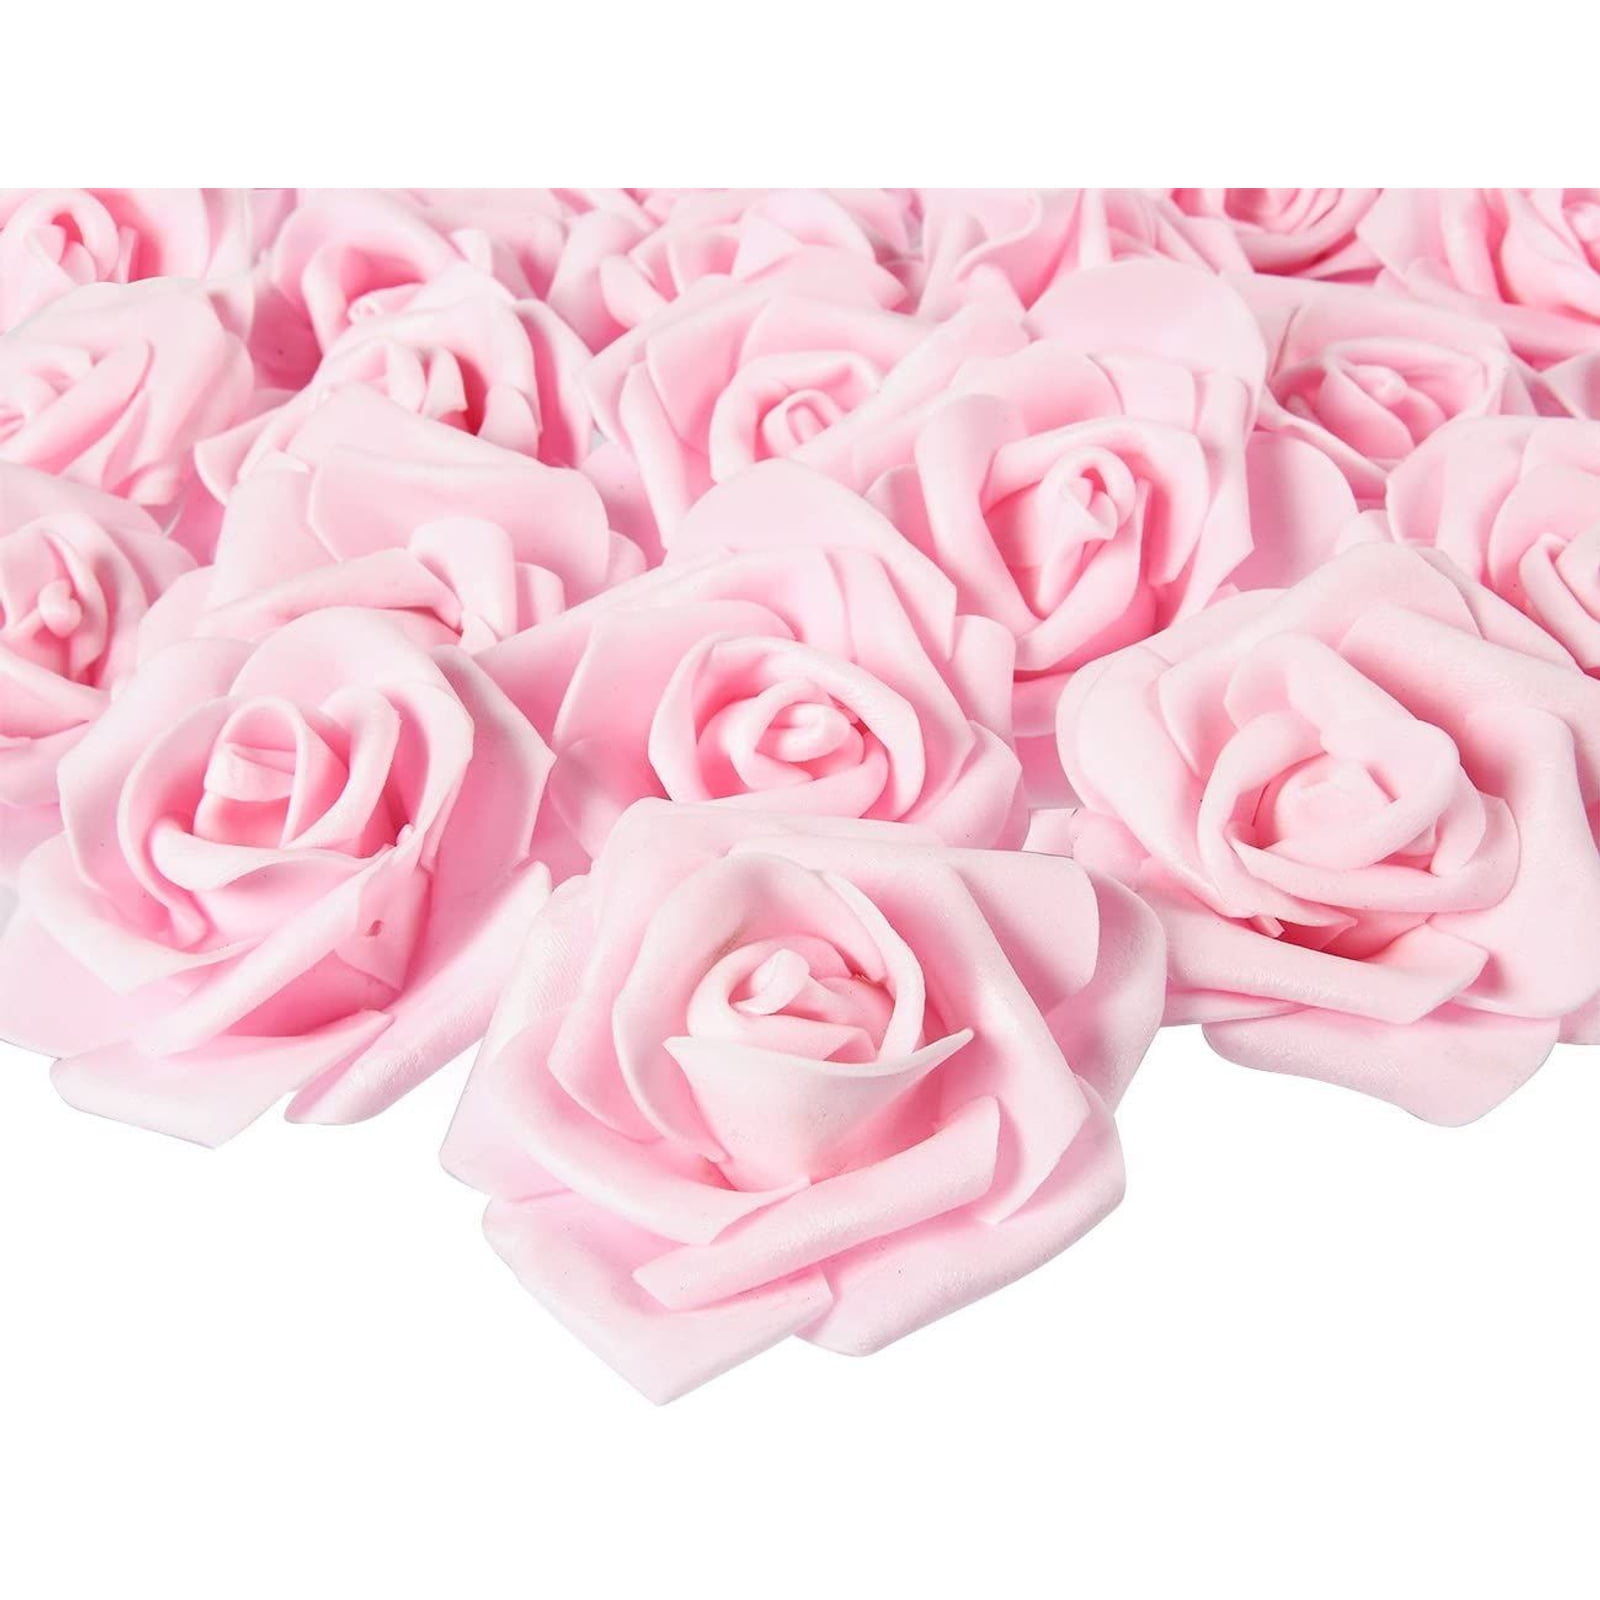 100 Large Foam Rose Heads Artificial Flowers Wedding Hand Flower Party Decor 